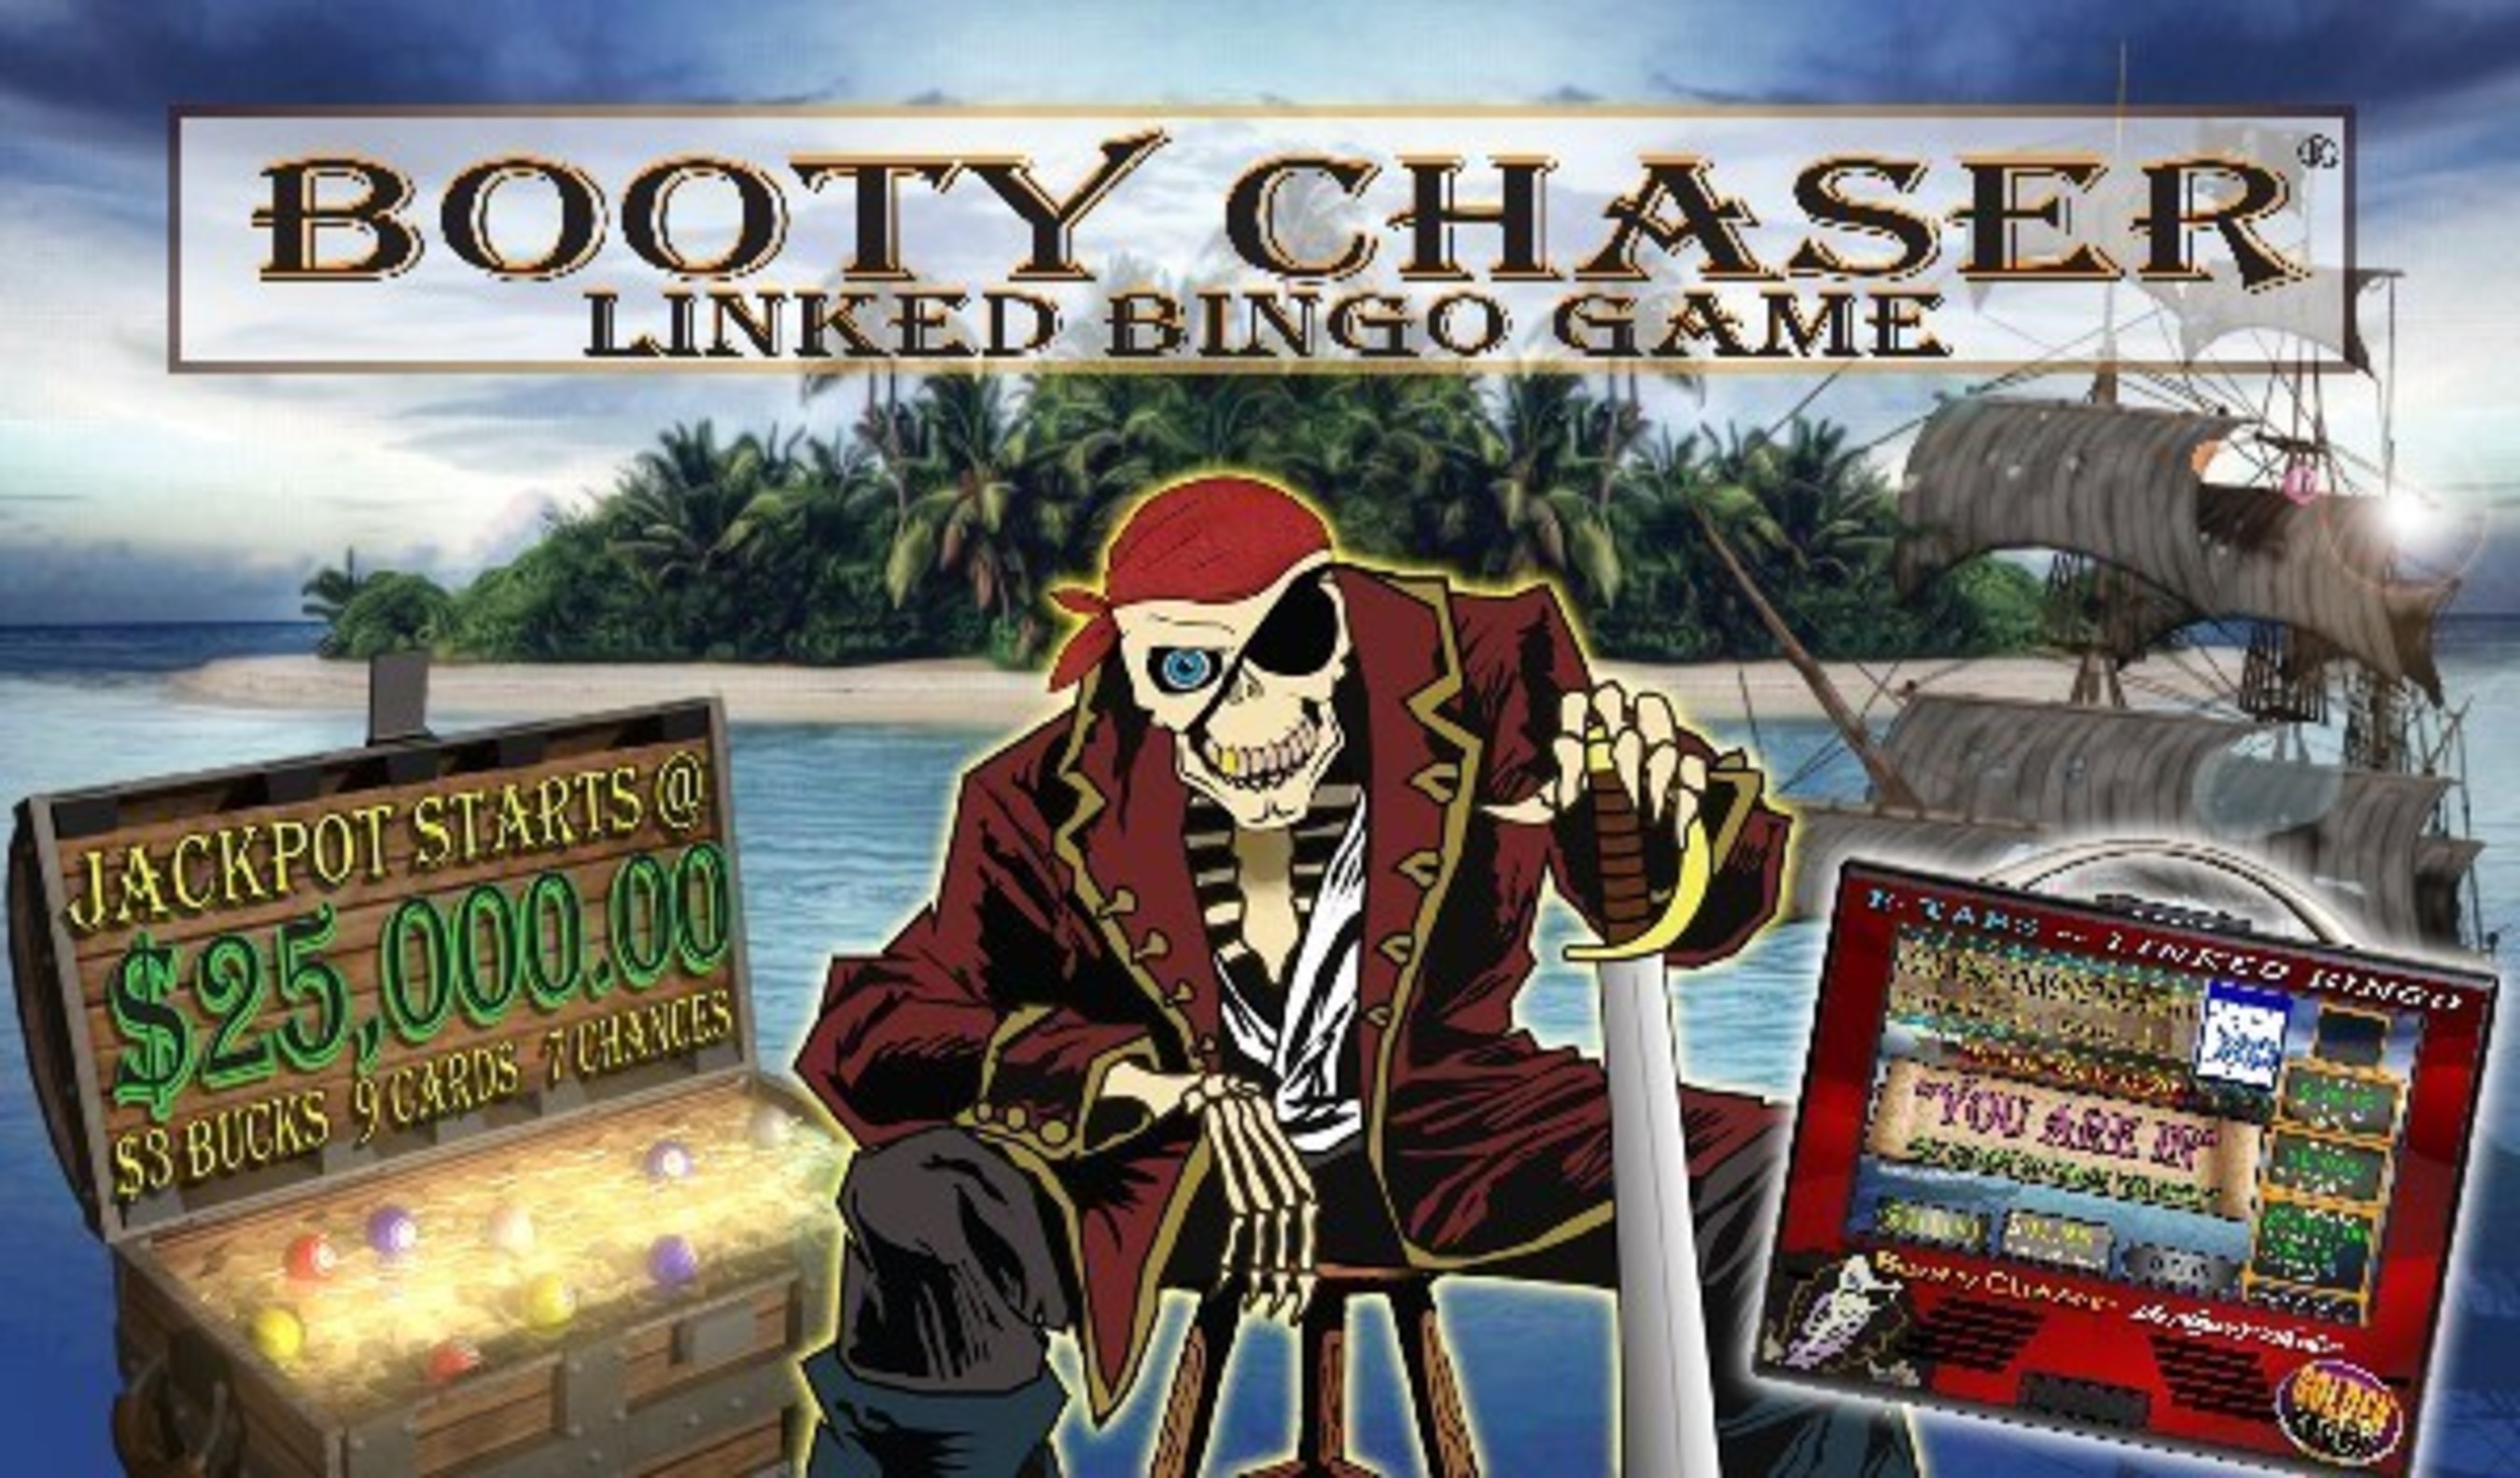 Booty chaser bingo locations